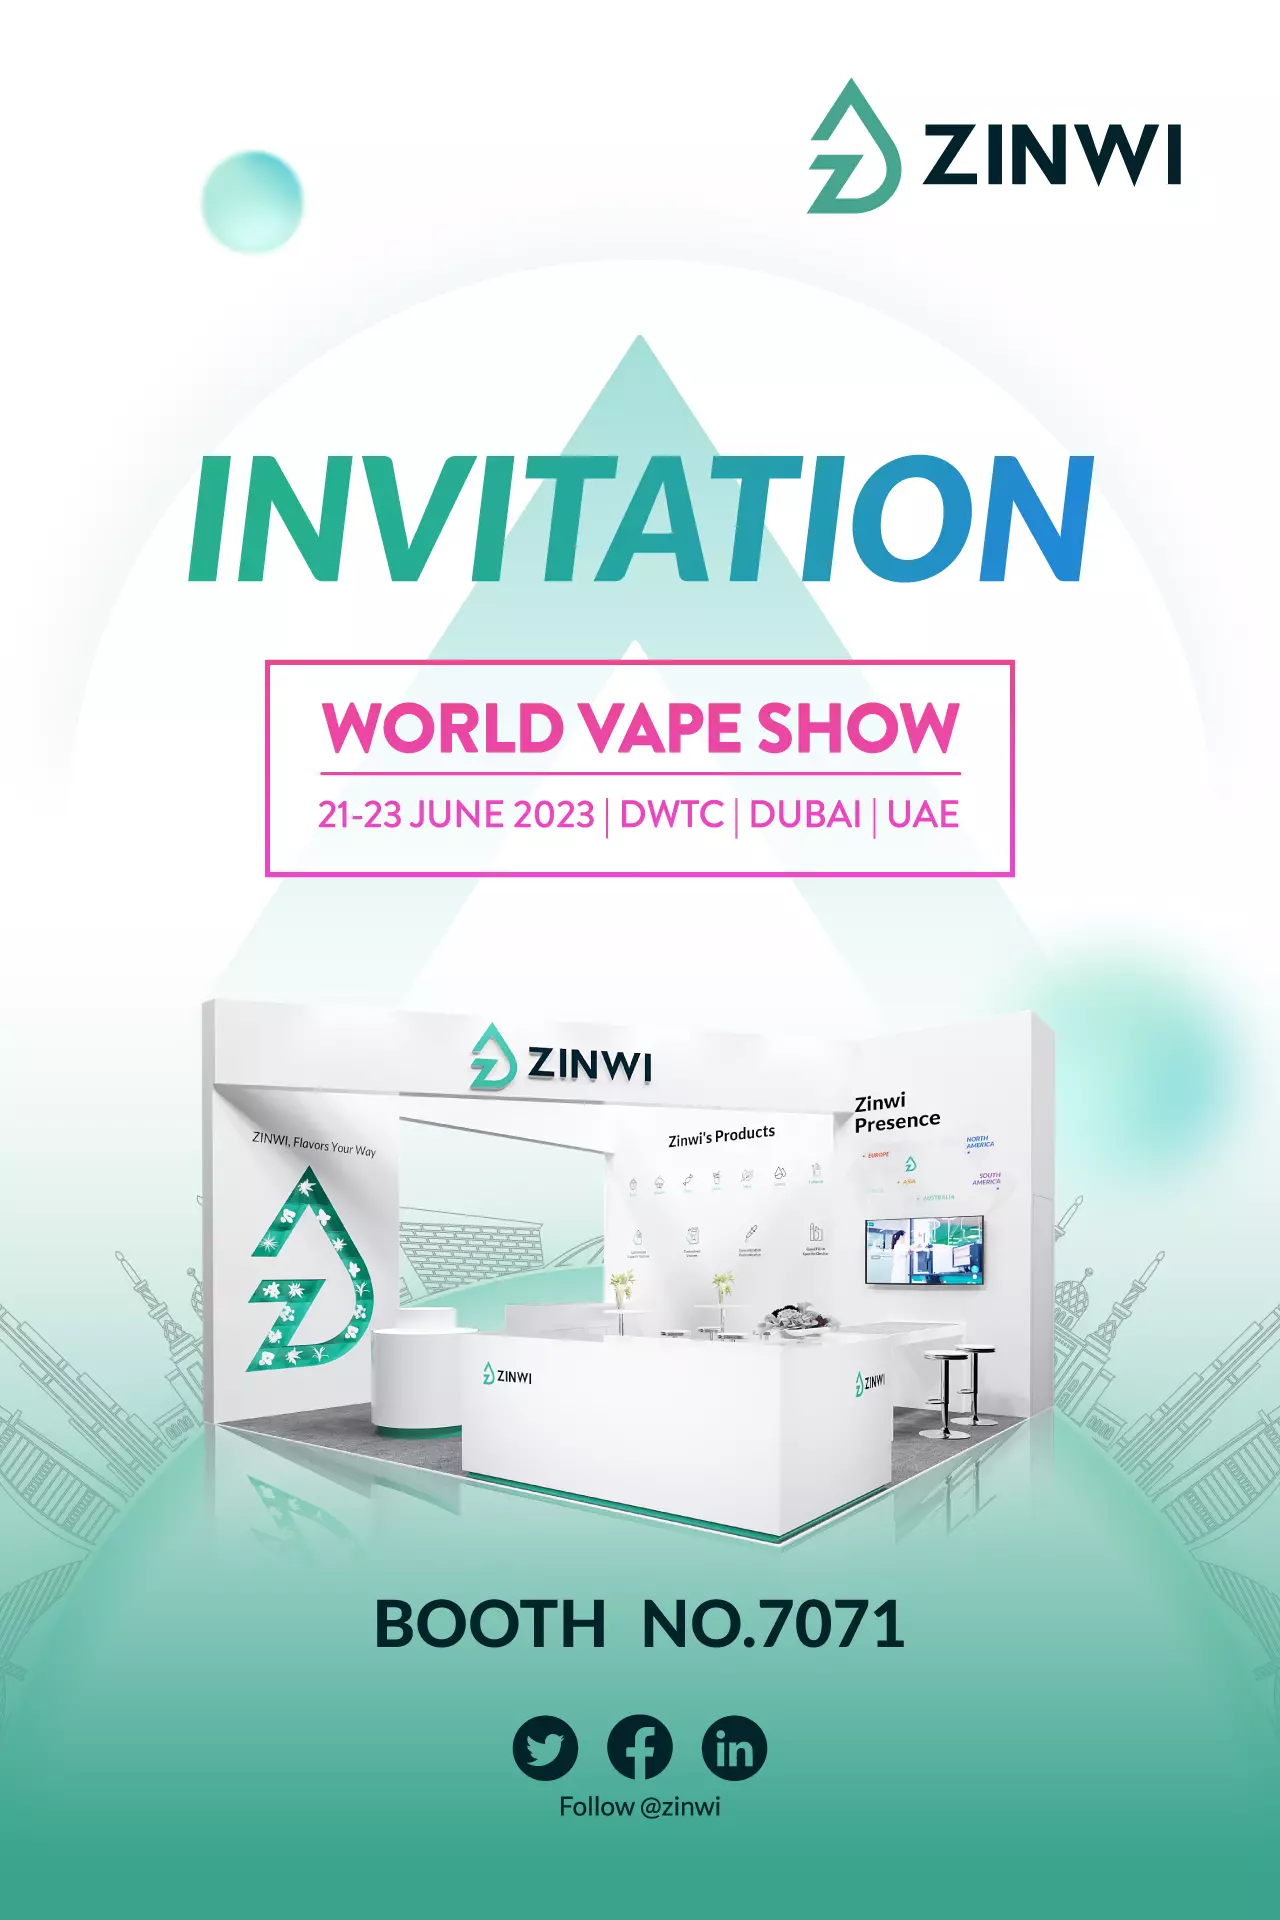 Invitation: Visit Zinwi On Dubai World Vape Show At Booth NO.7071